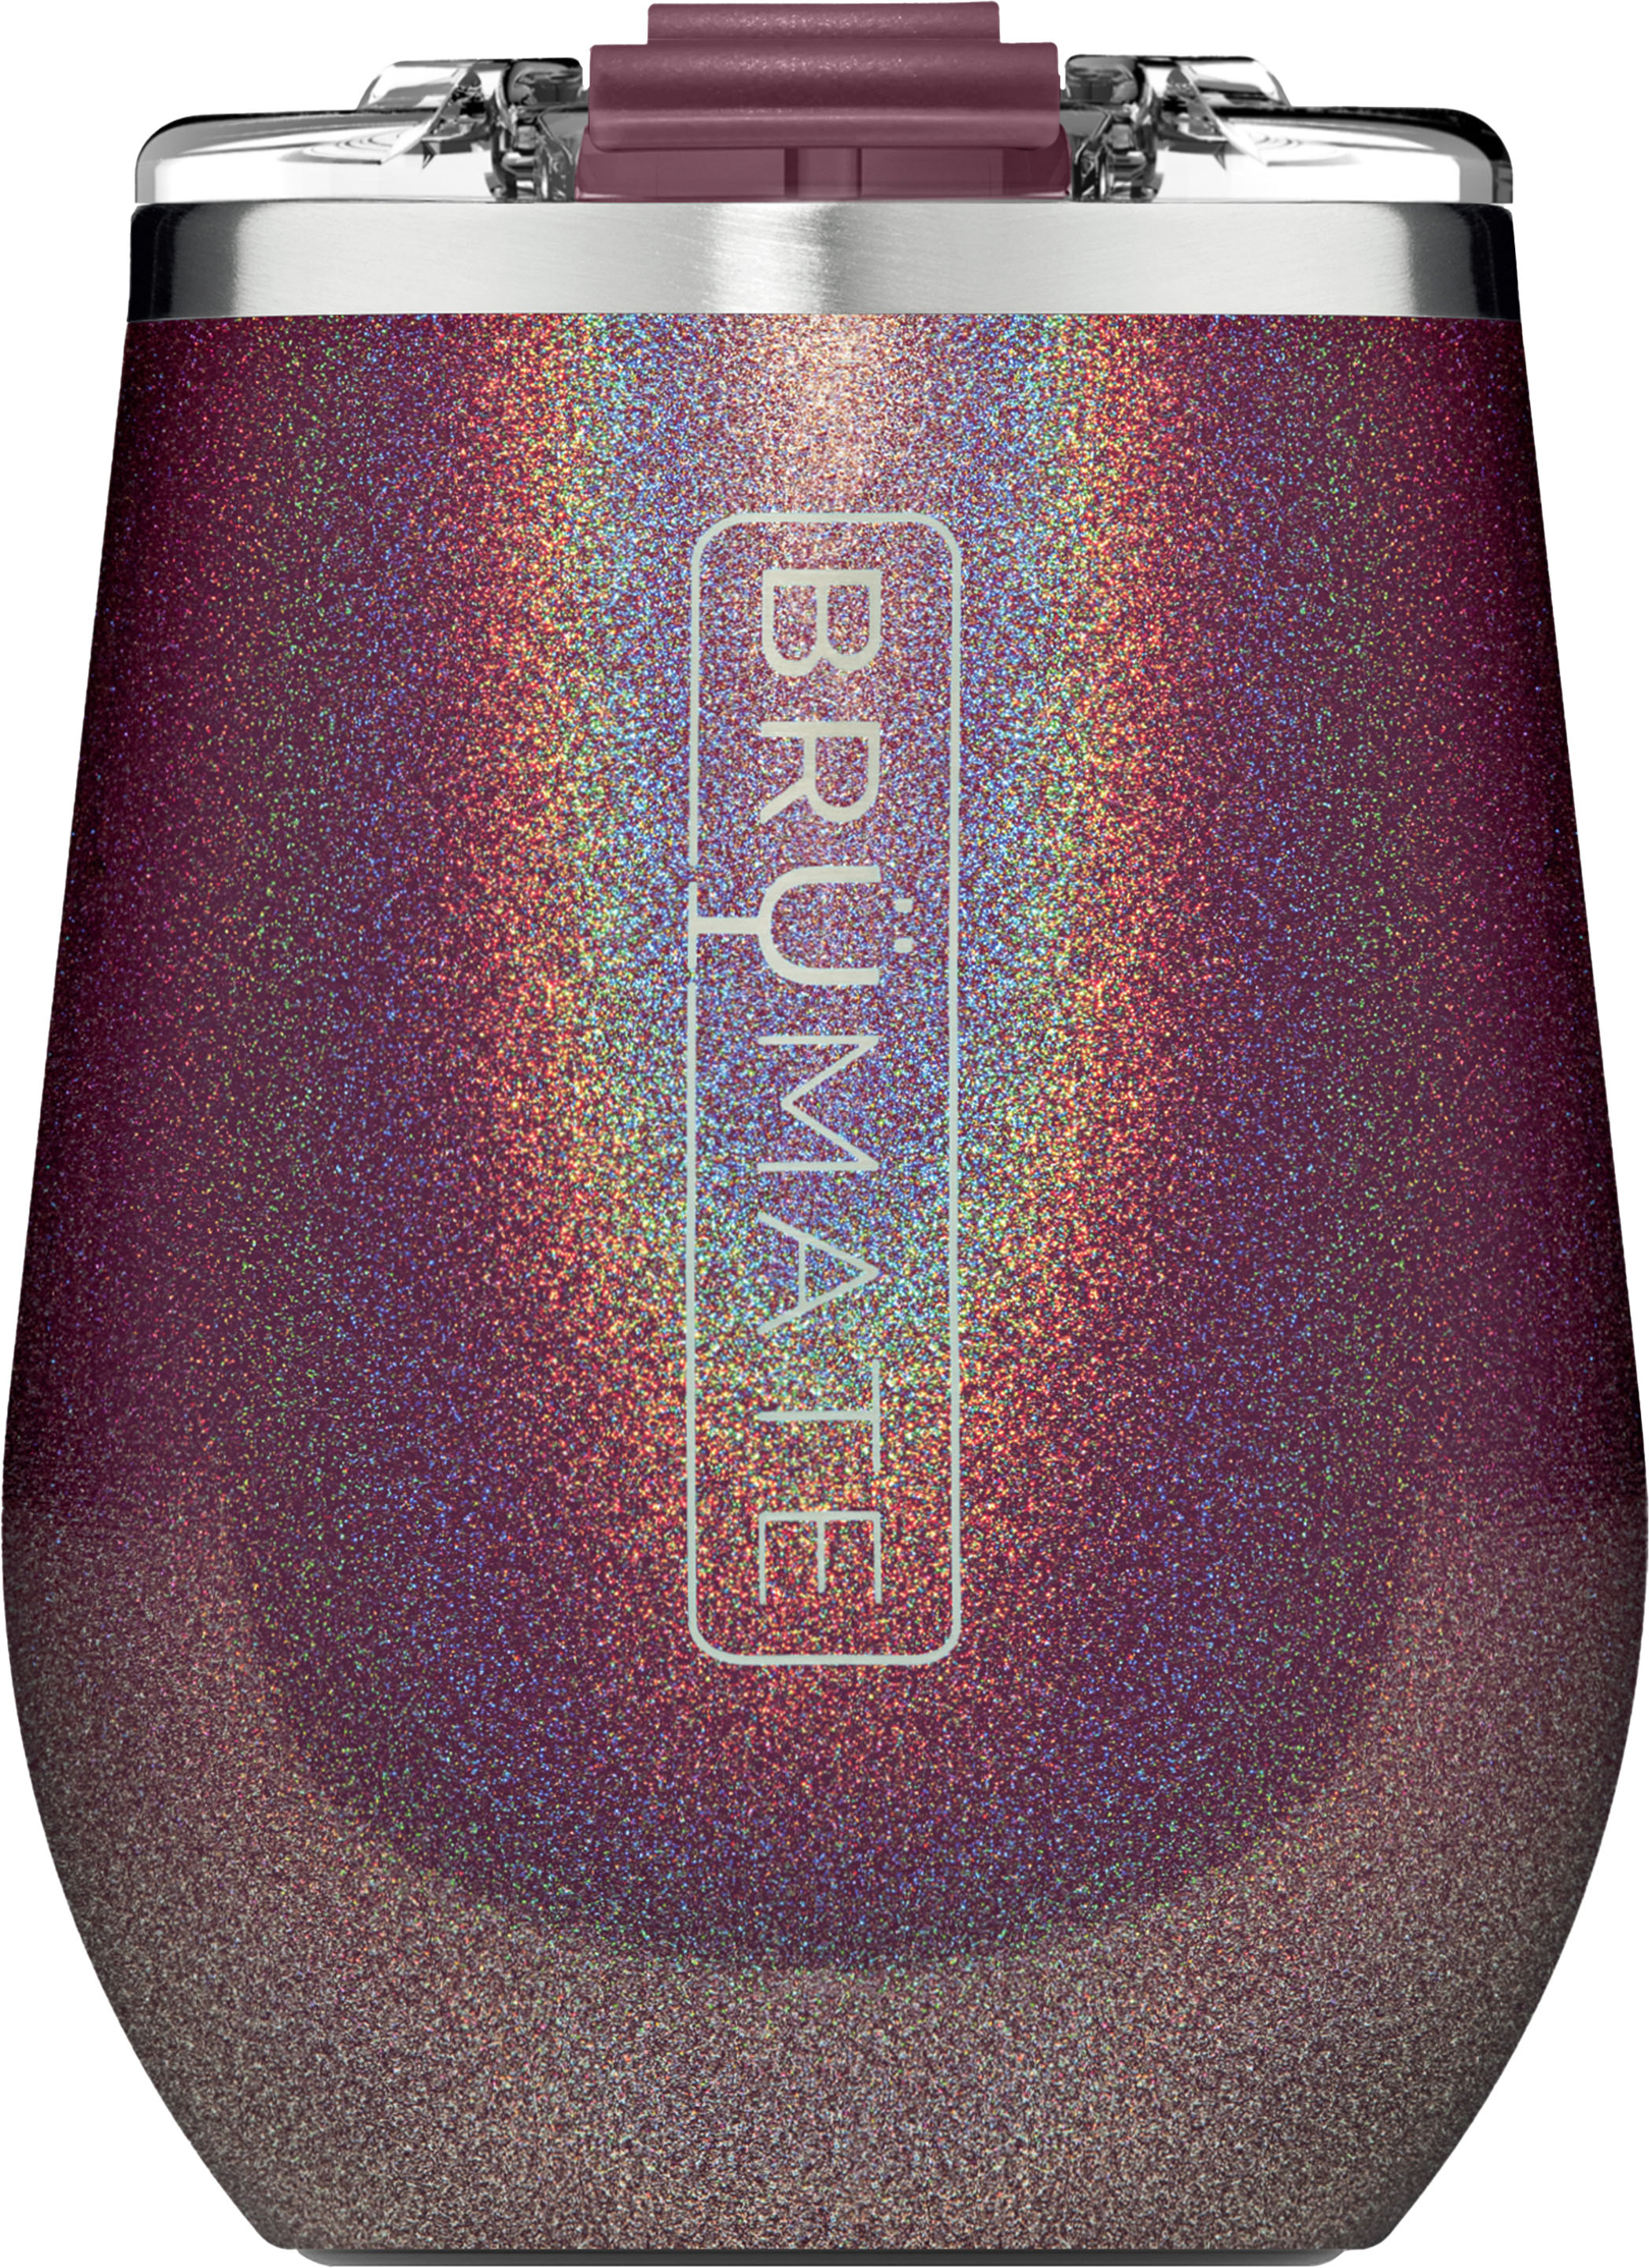 Best Buy: BruMate Uncork'd XL Glitter Merlot UC14GME